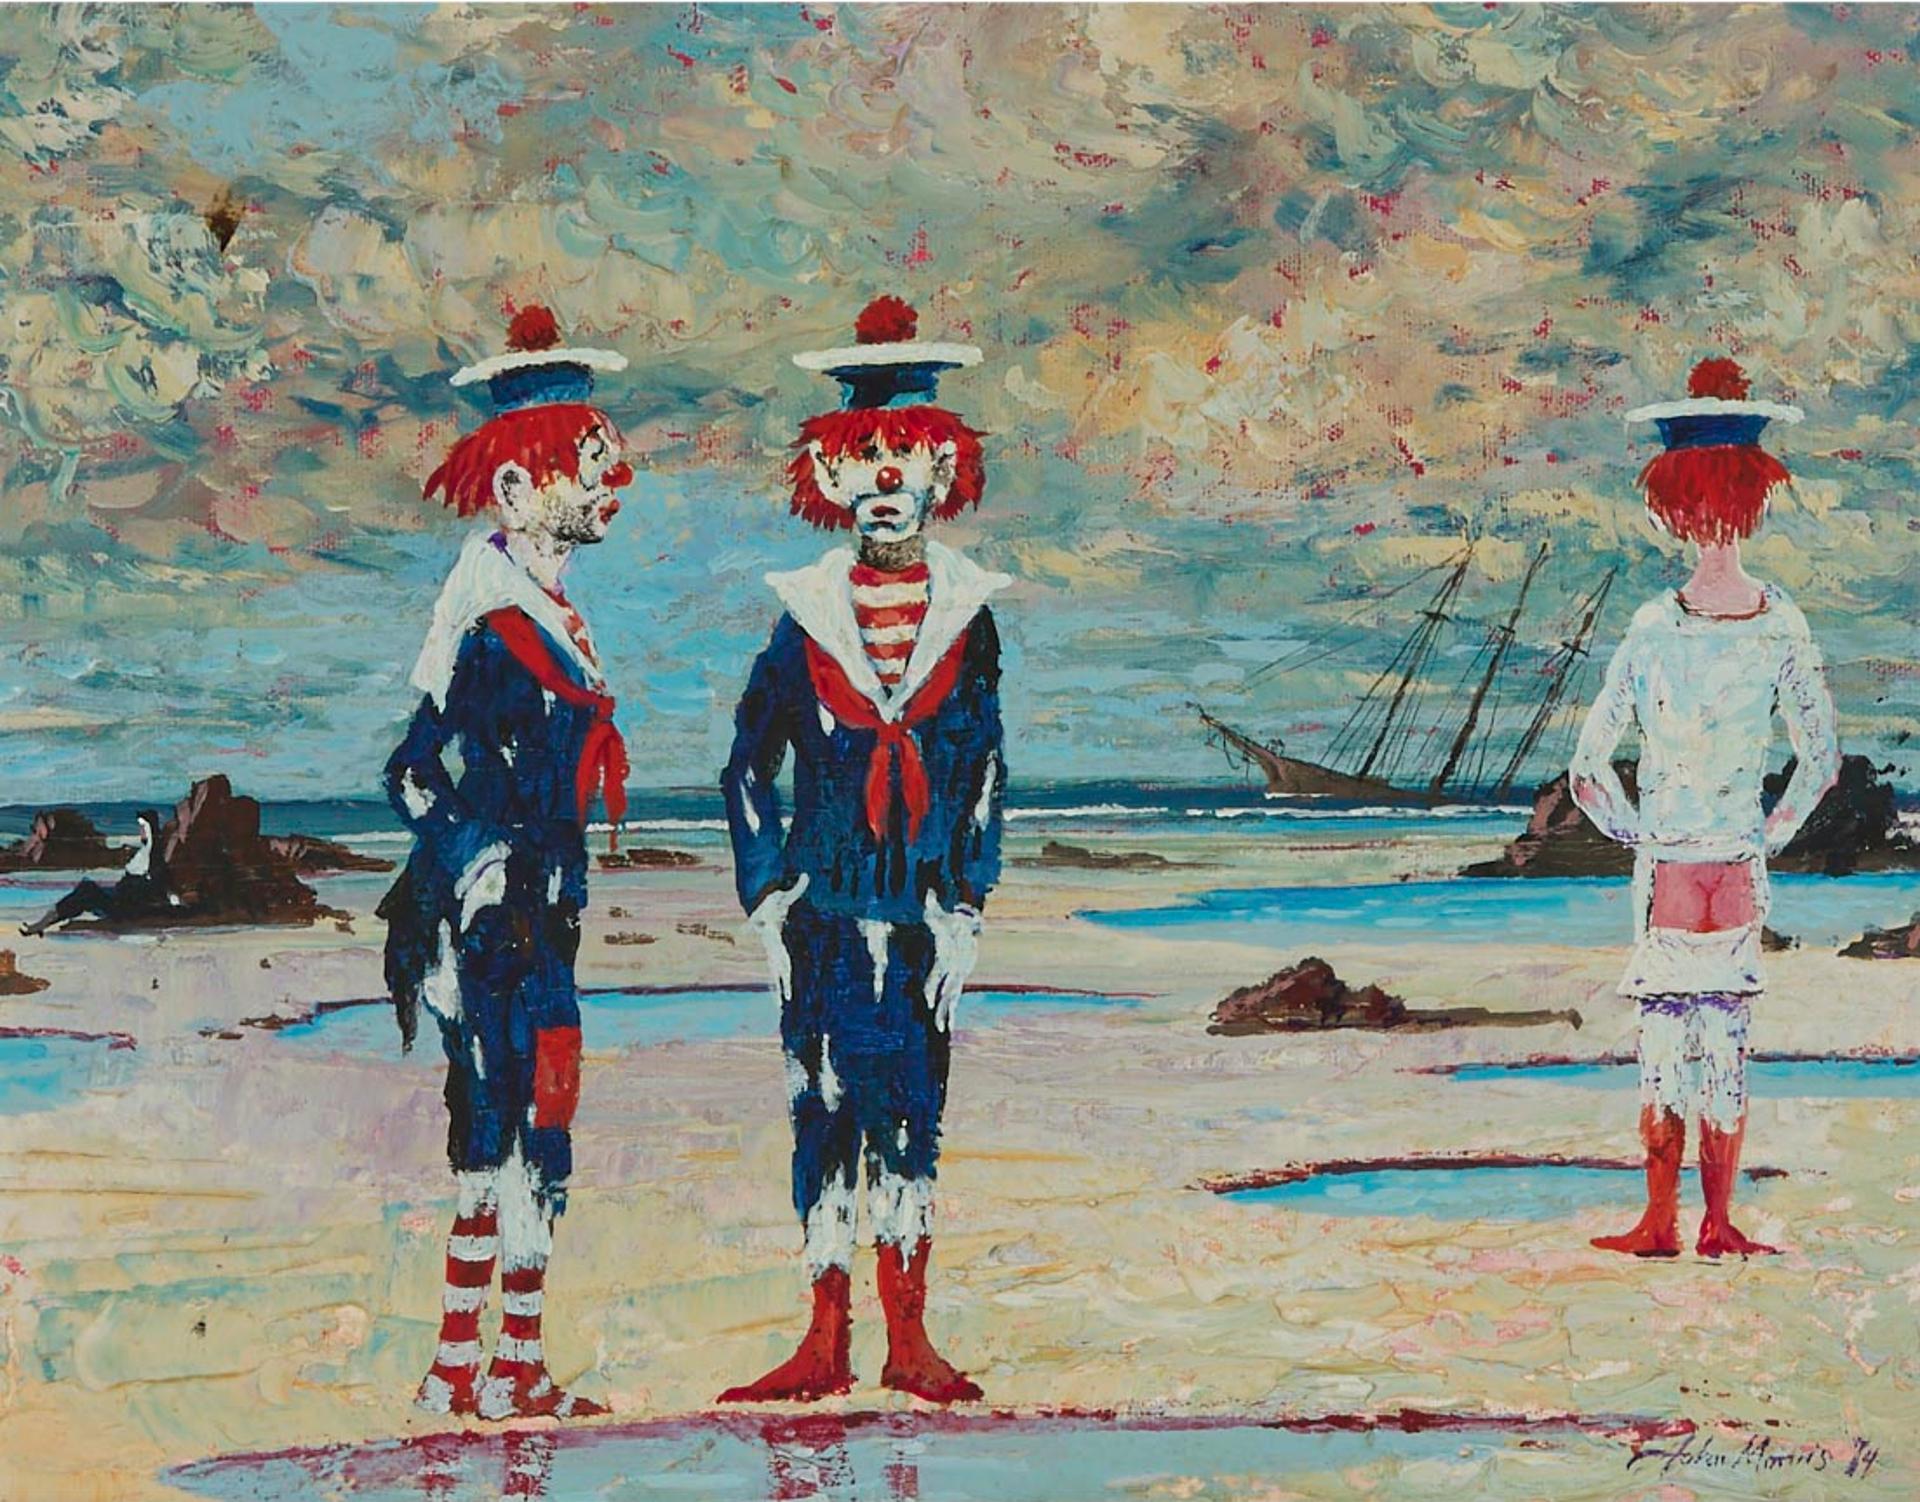 John W. Morris (1865-1924) - Shipwrecked Clowns, 1974